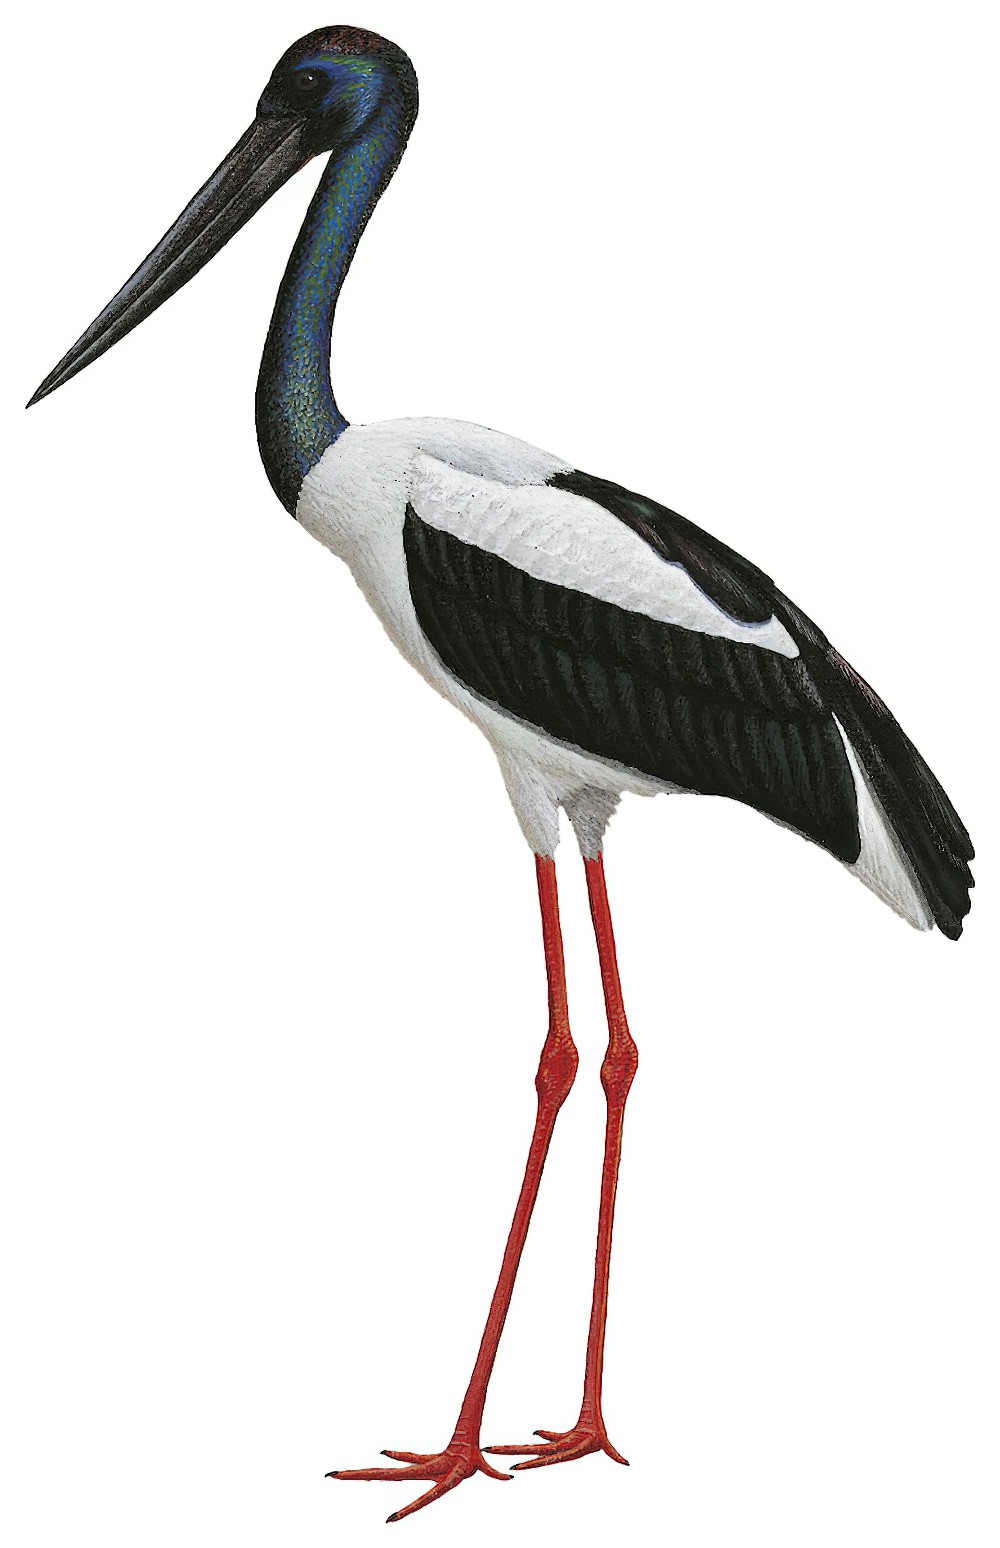 Black-necked Stork / Ephippiorhynchus asiaticus